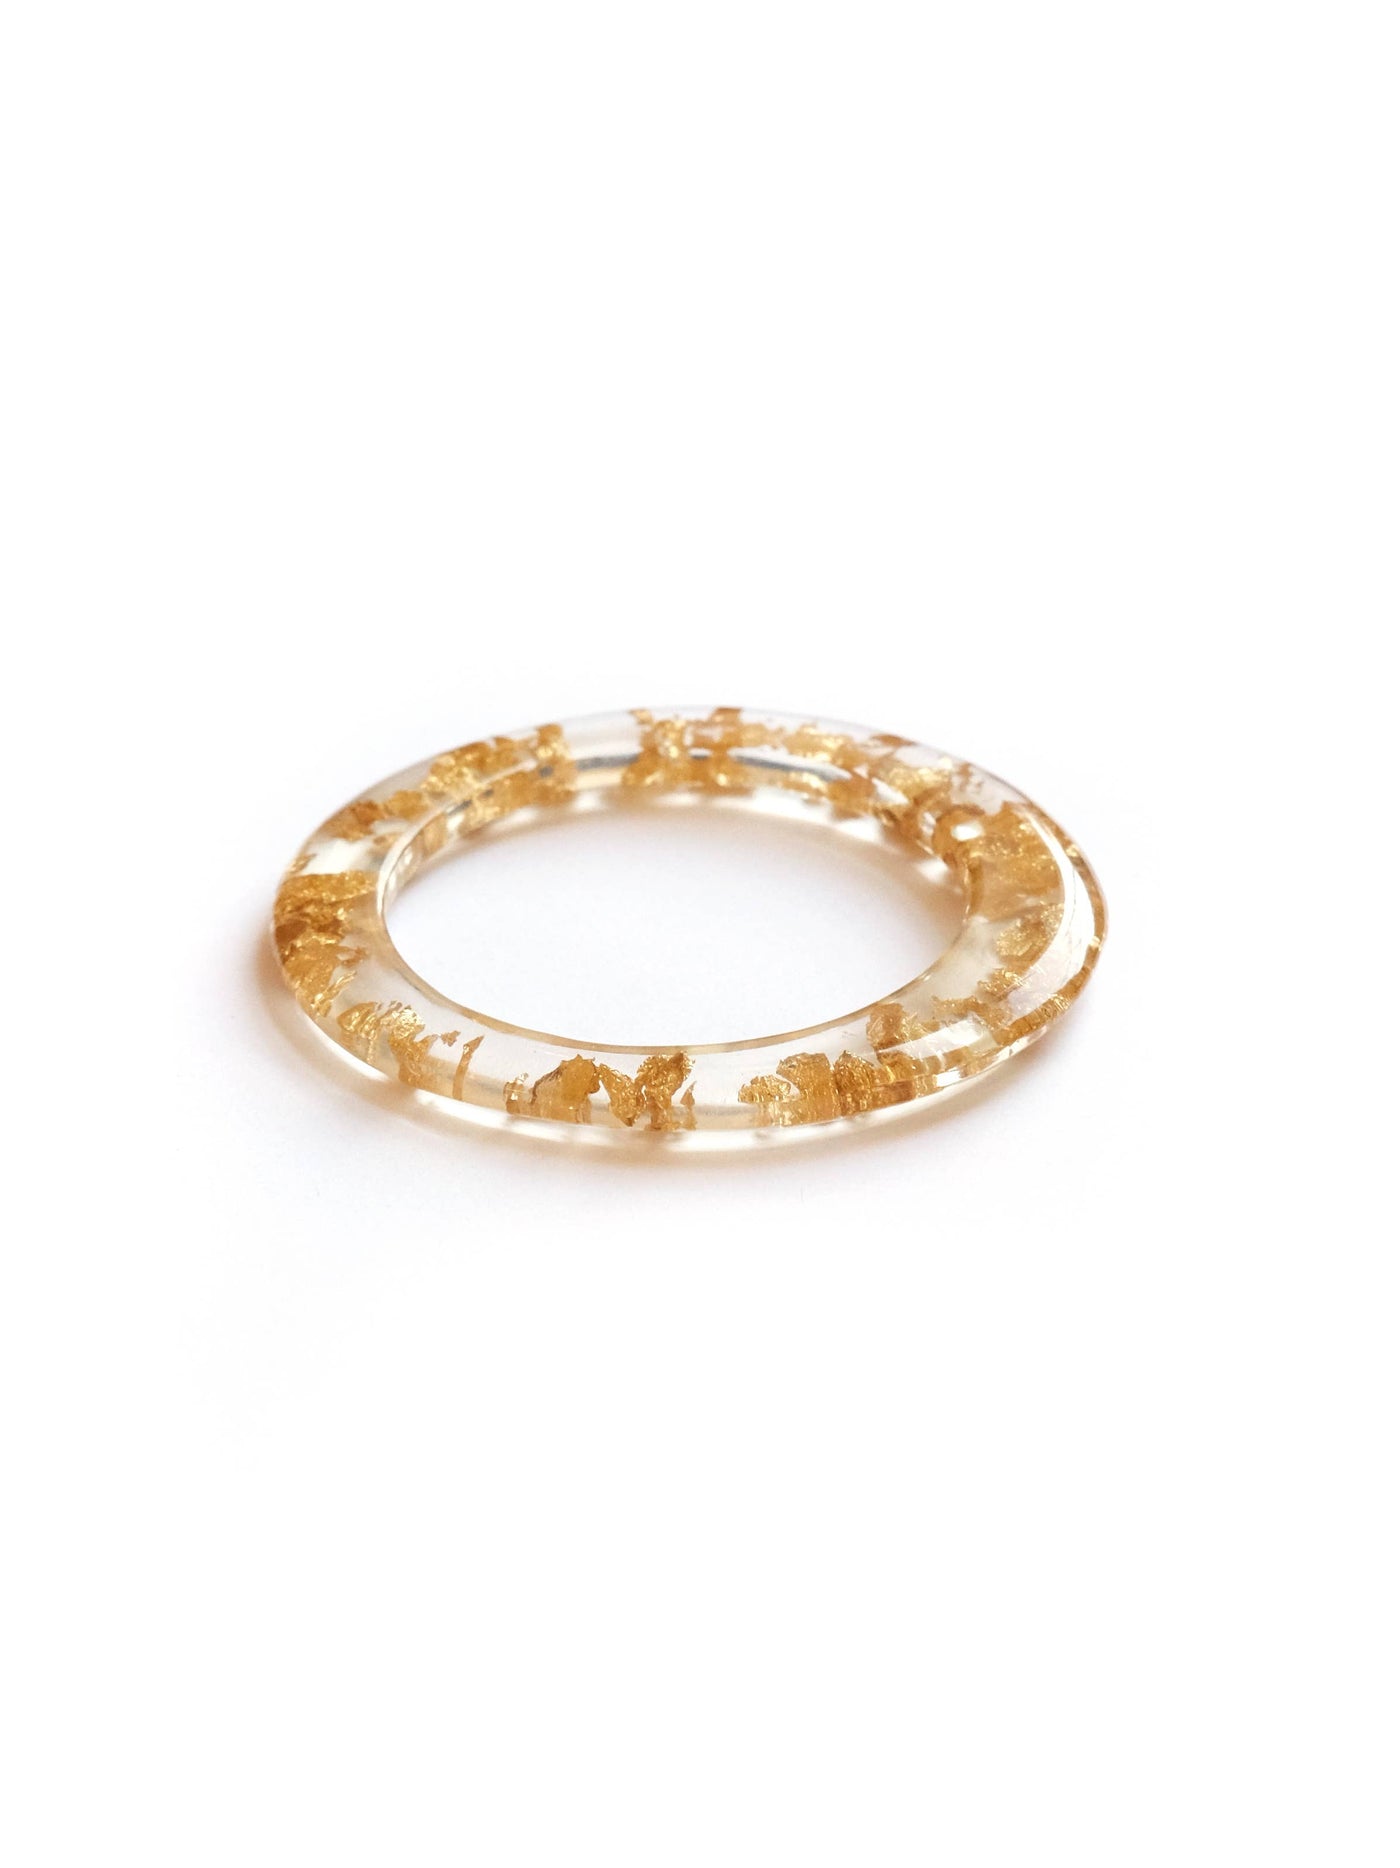 Bracelet, Nessa - Danshire Market and Design , clear resin bracelet with flakes of gold or silver  inside